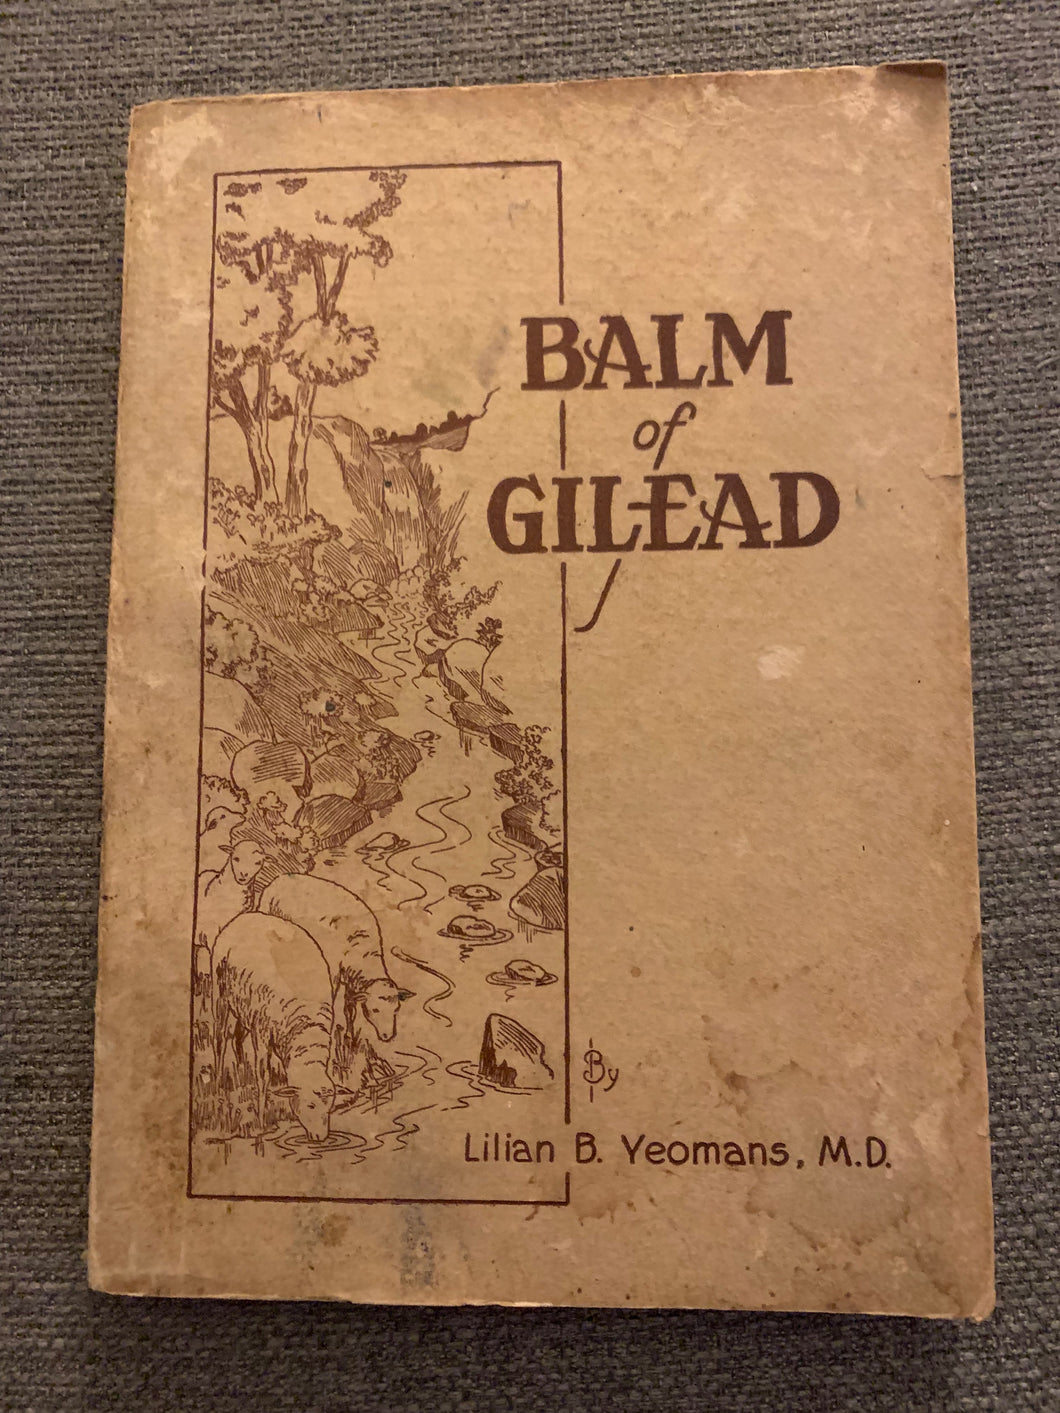 Balm of Gilead by Lilian B. Yeomans